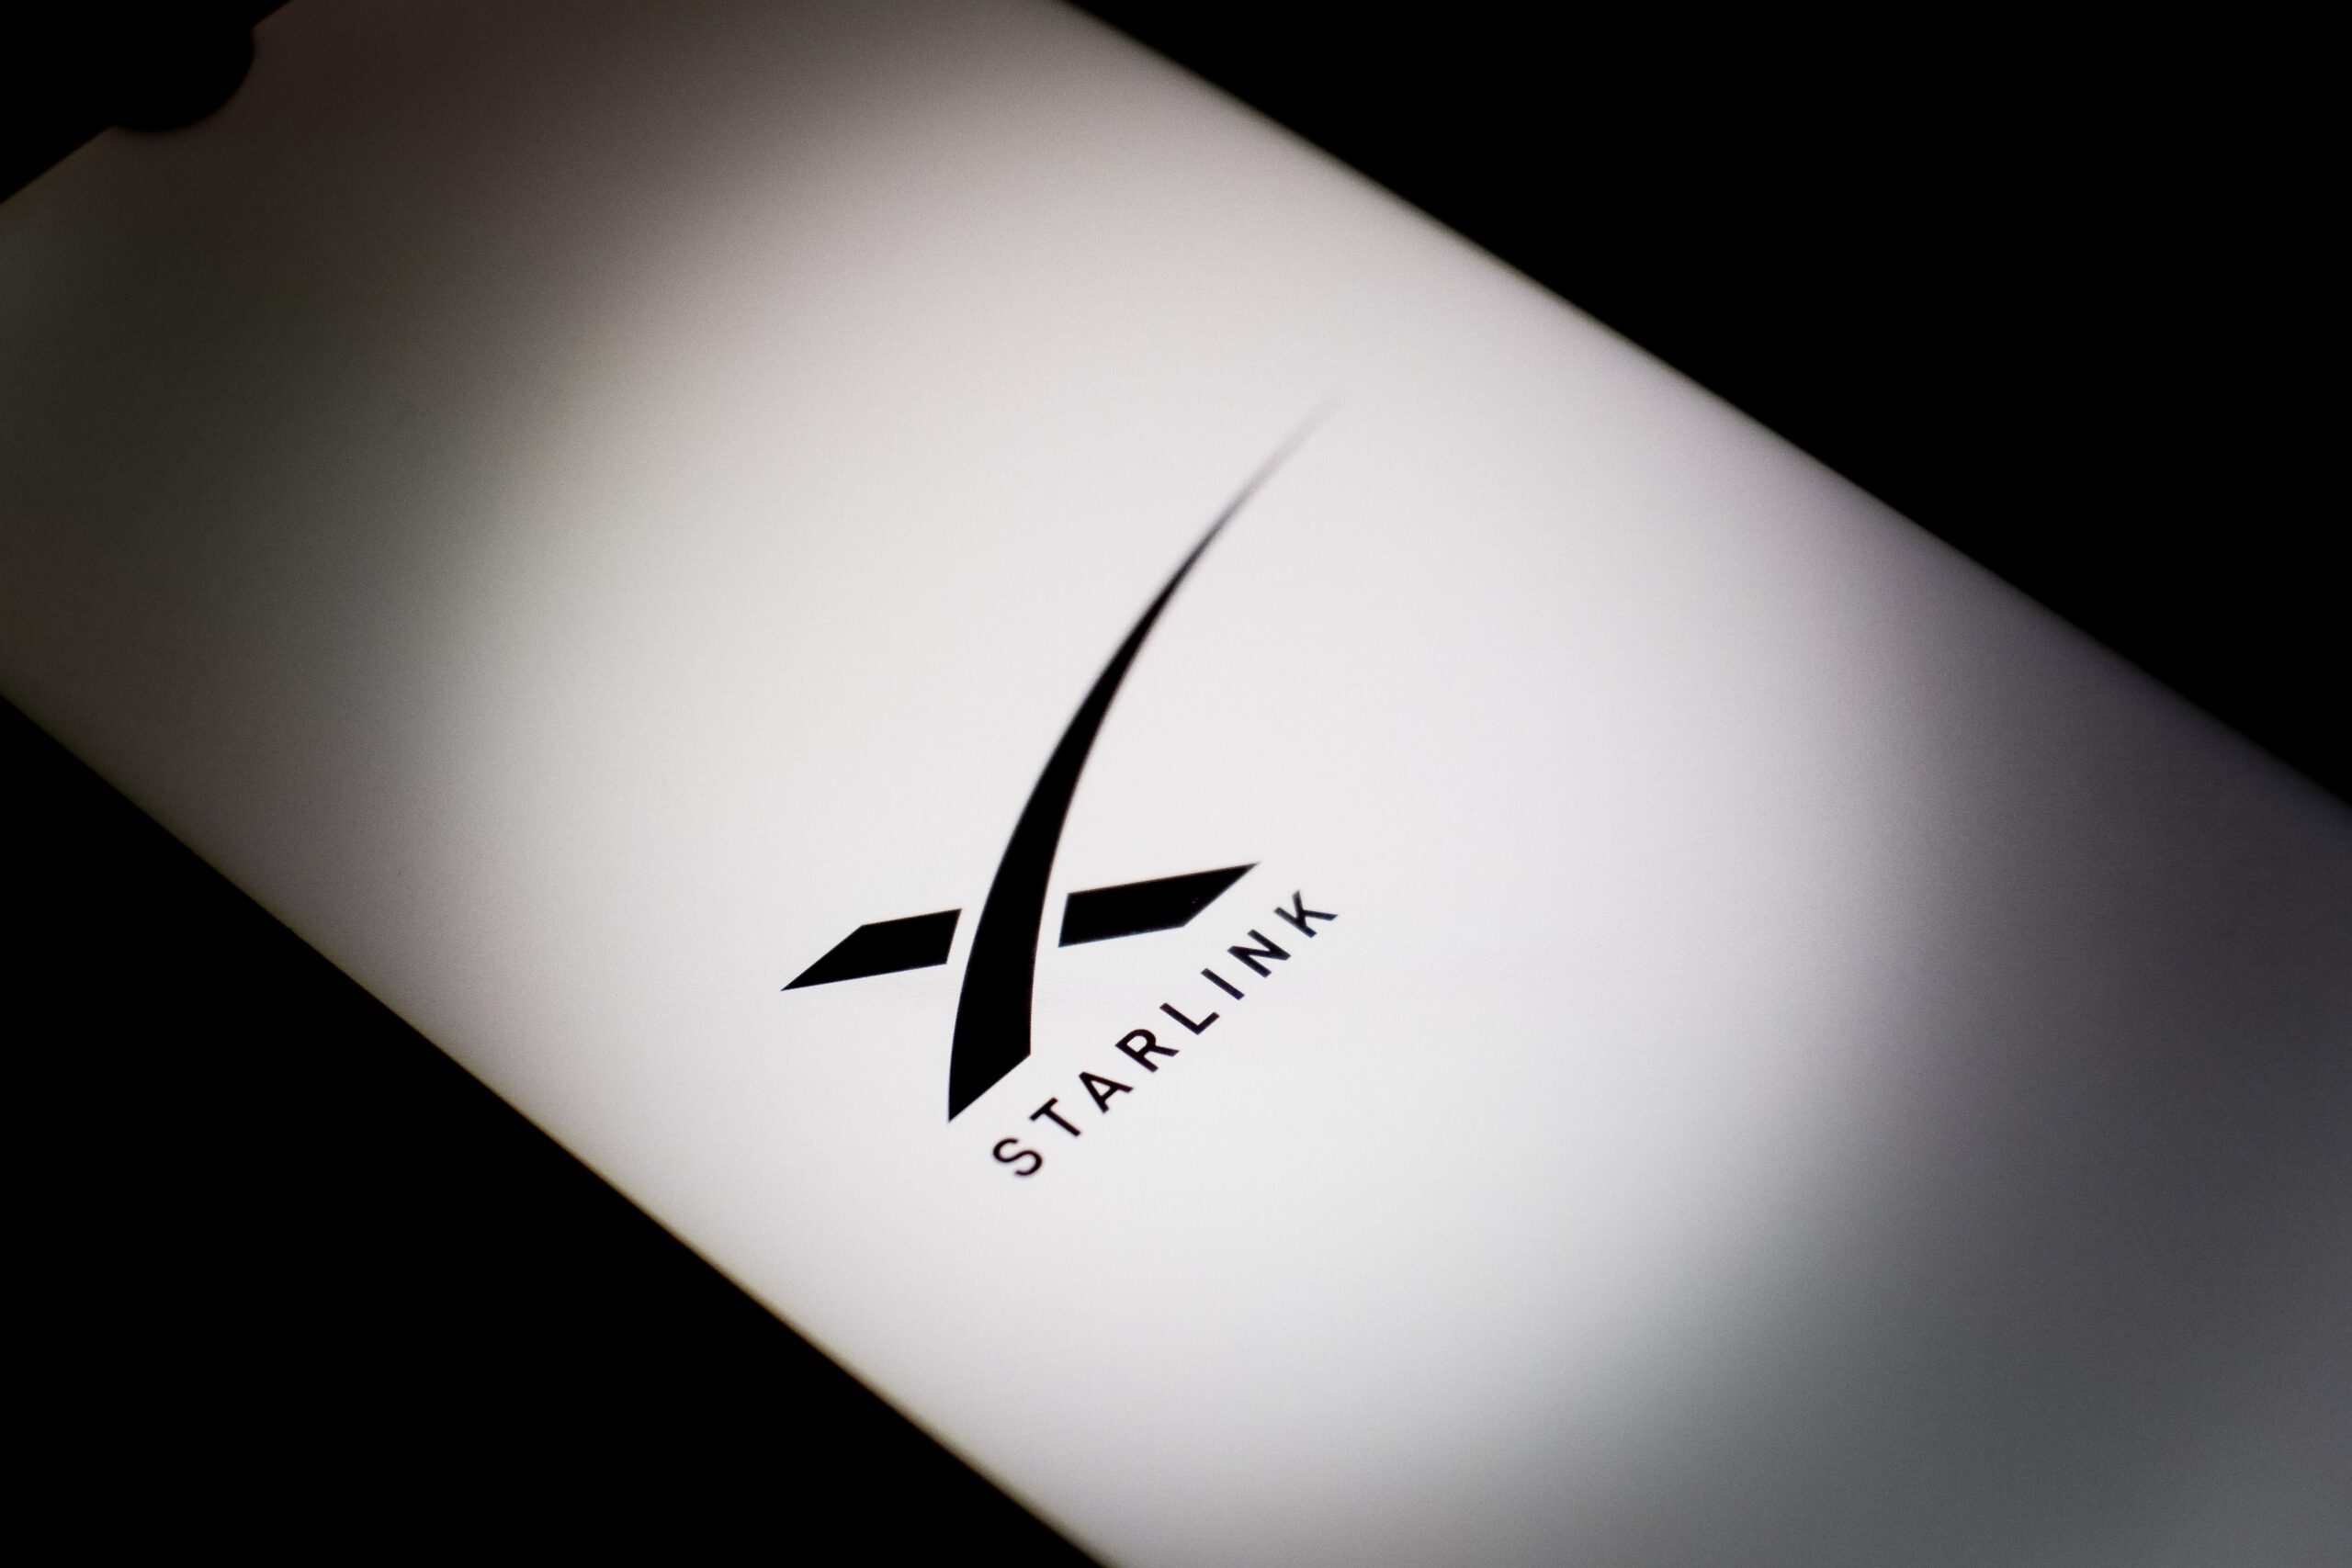 Starlink logo on smartphone